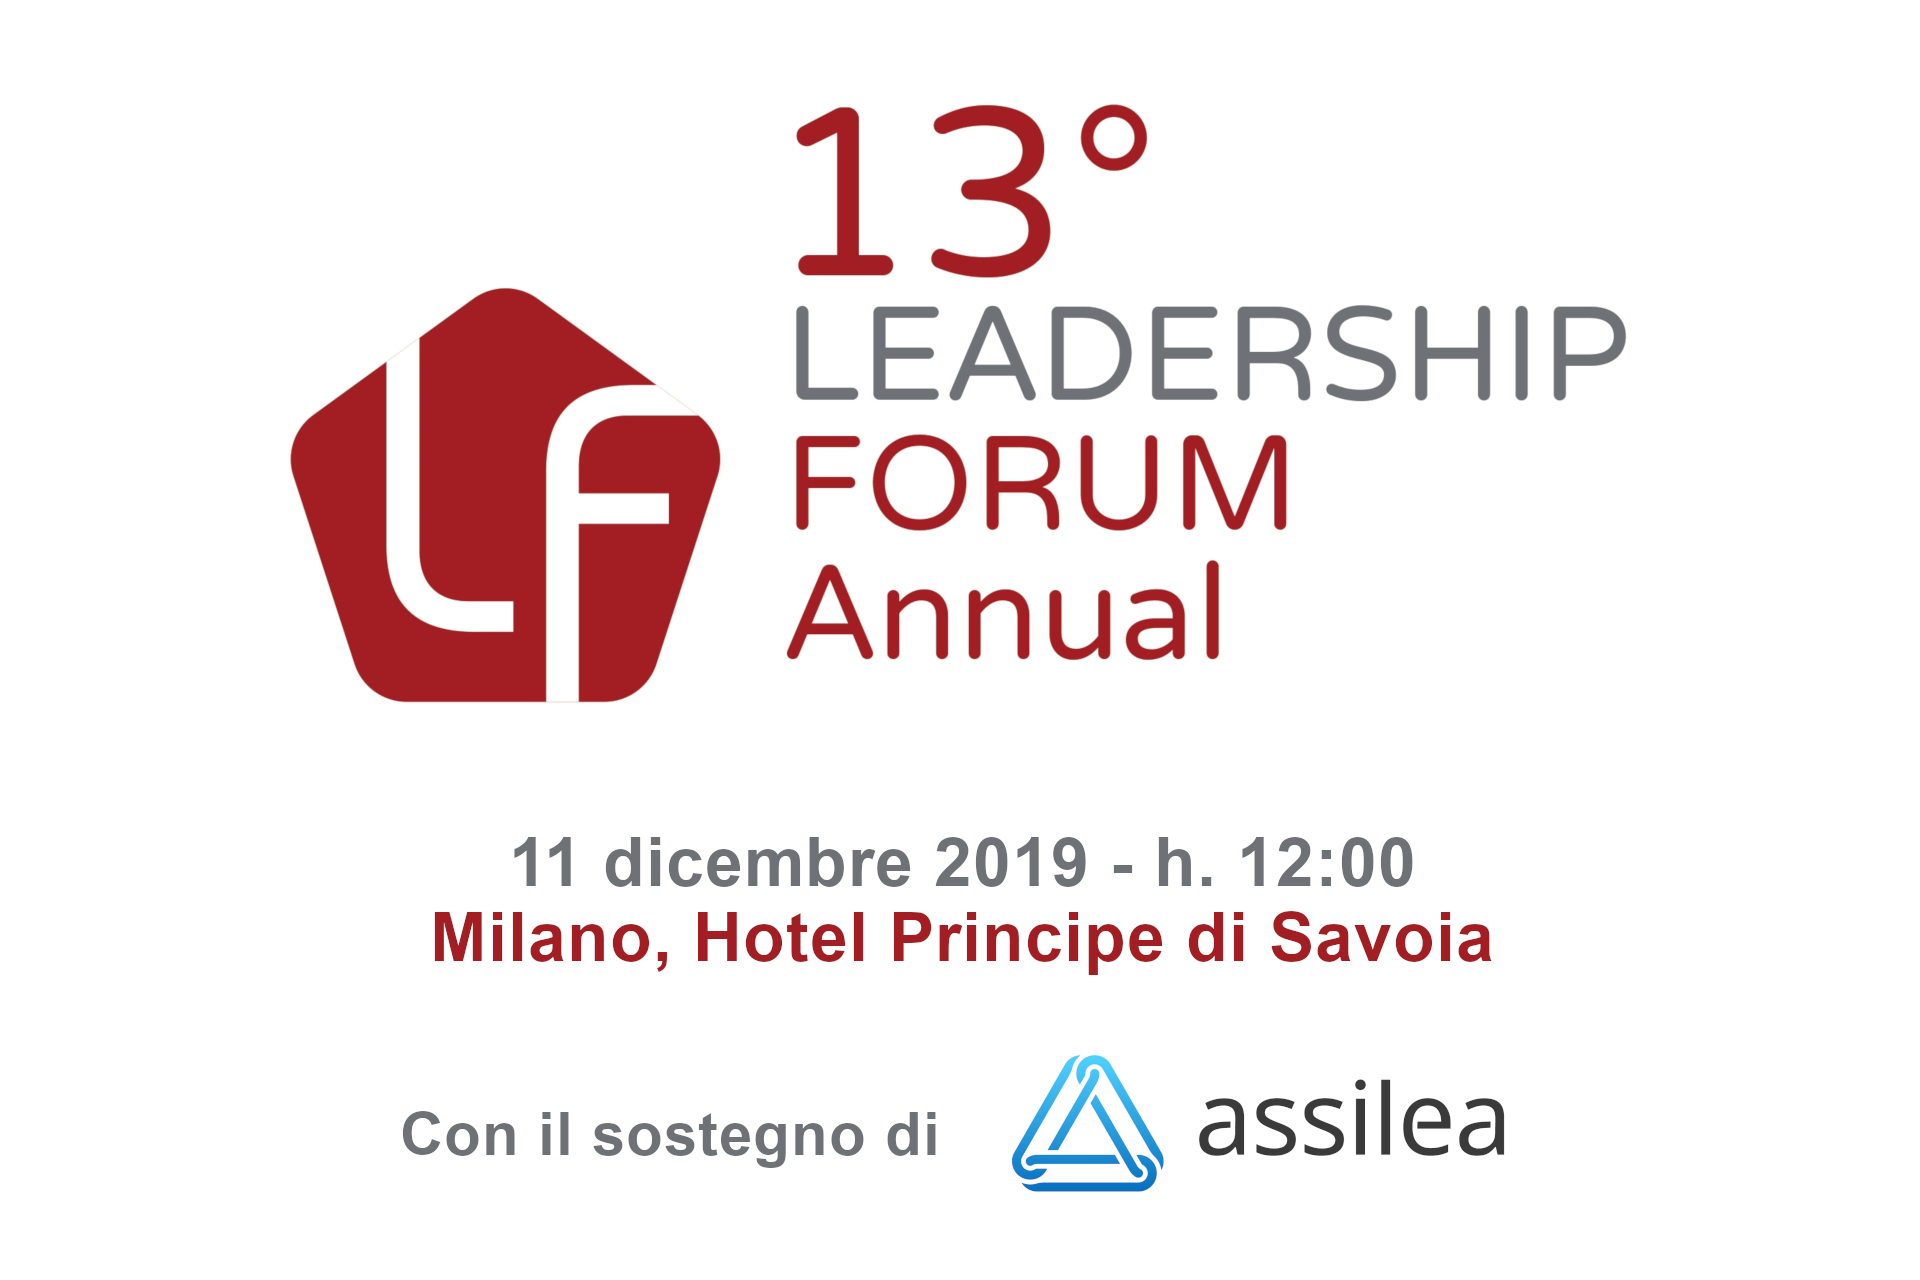 13° Leadership Forum Annual